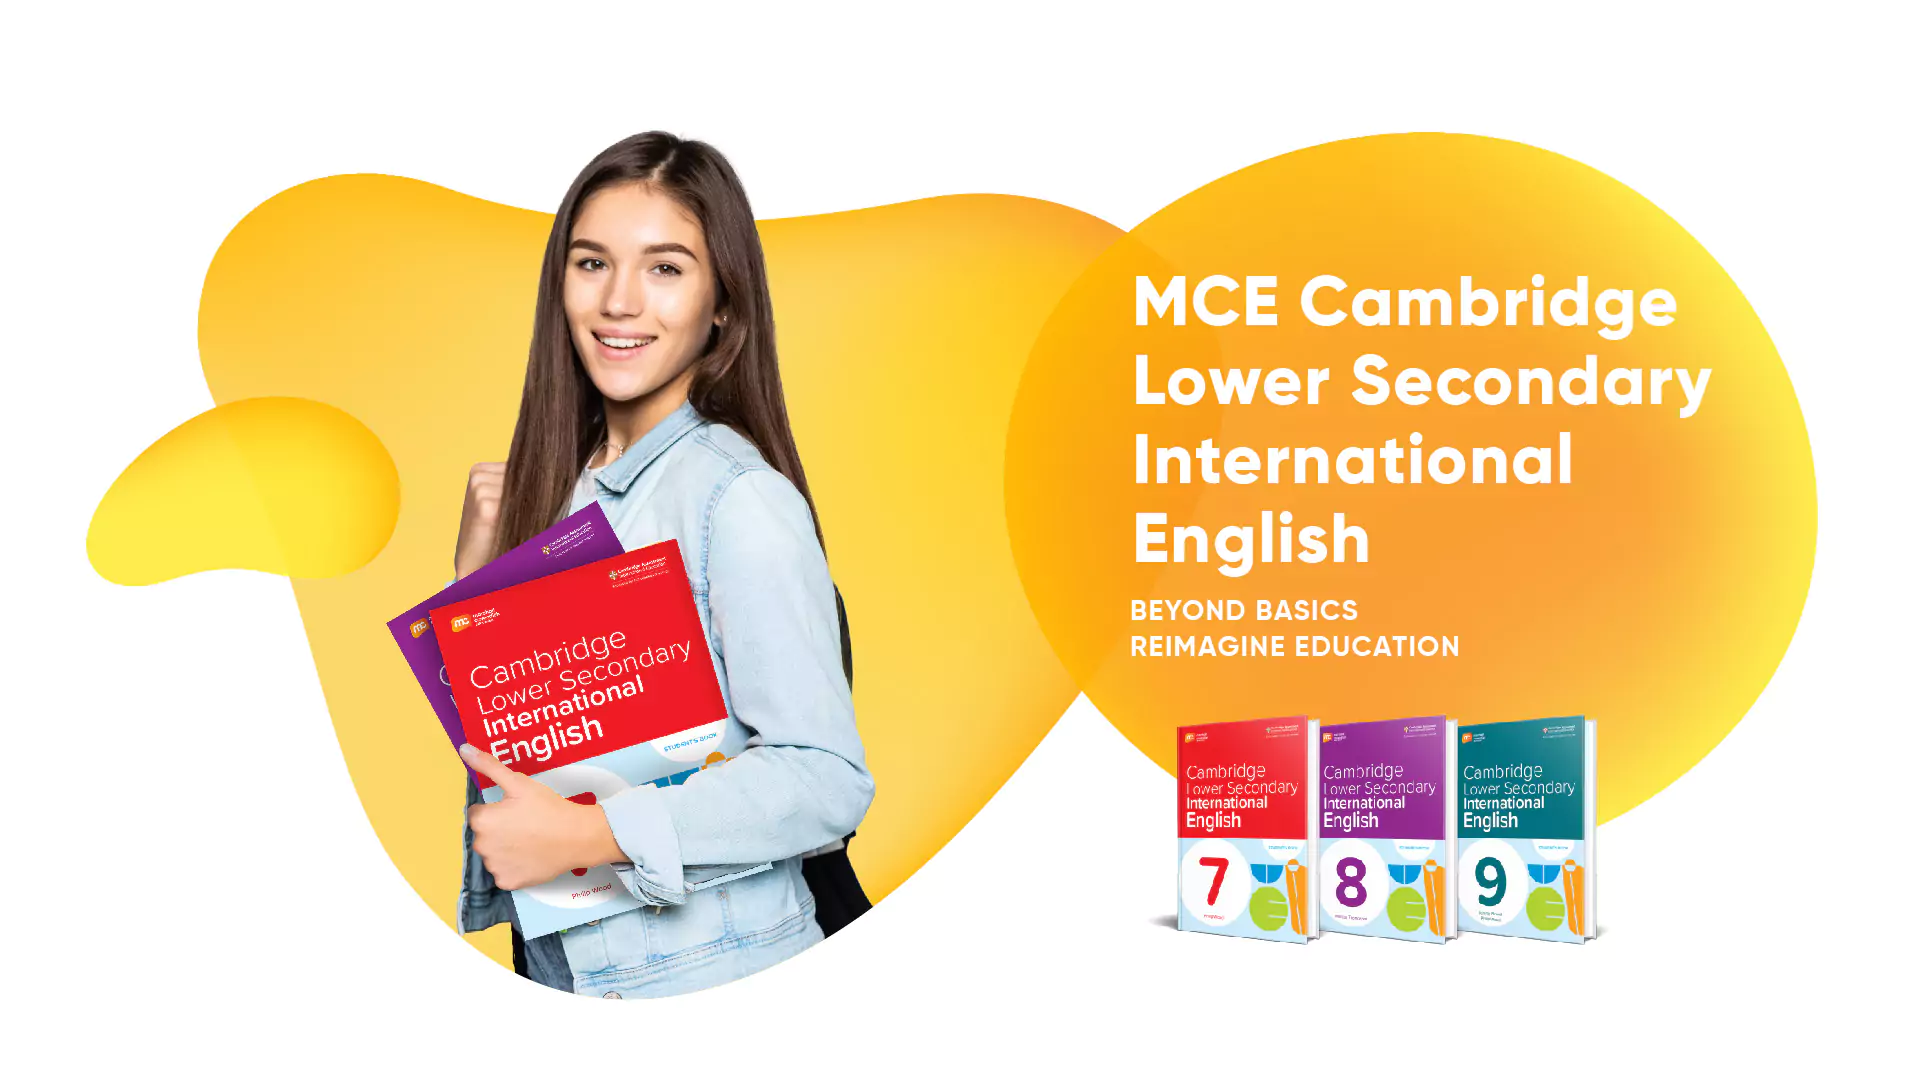 MCE Cambridge Lower Secondary International English